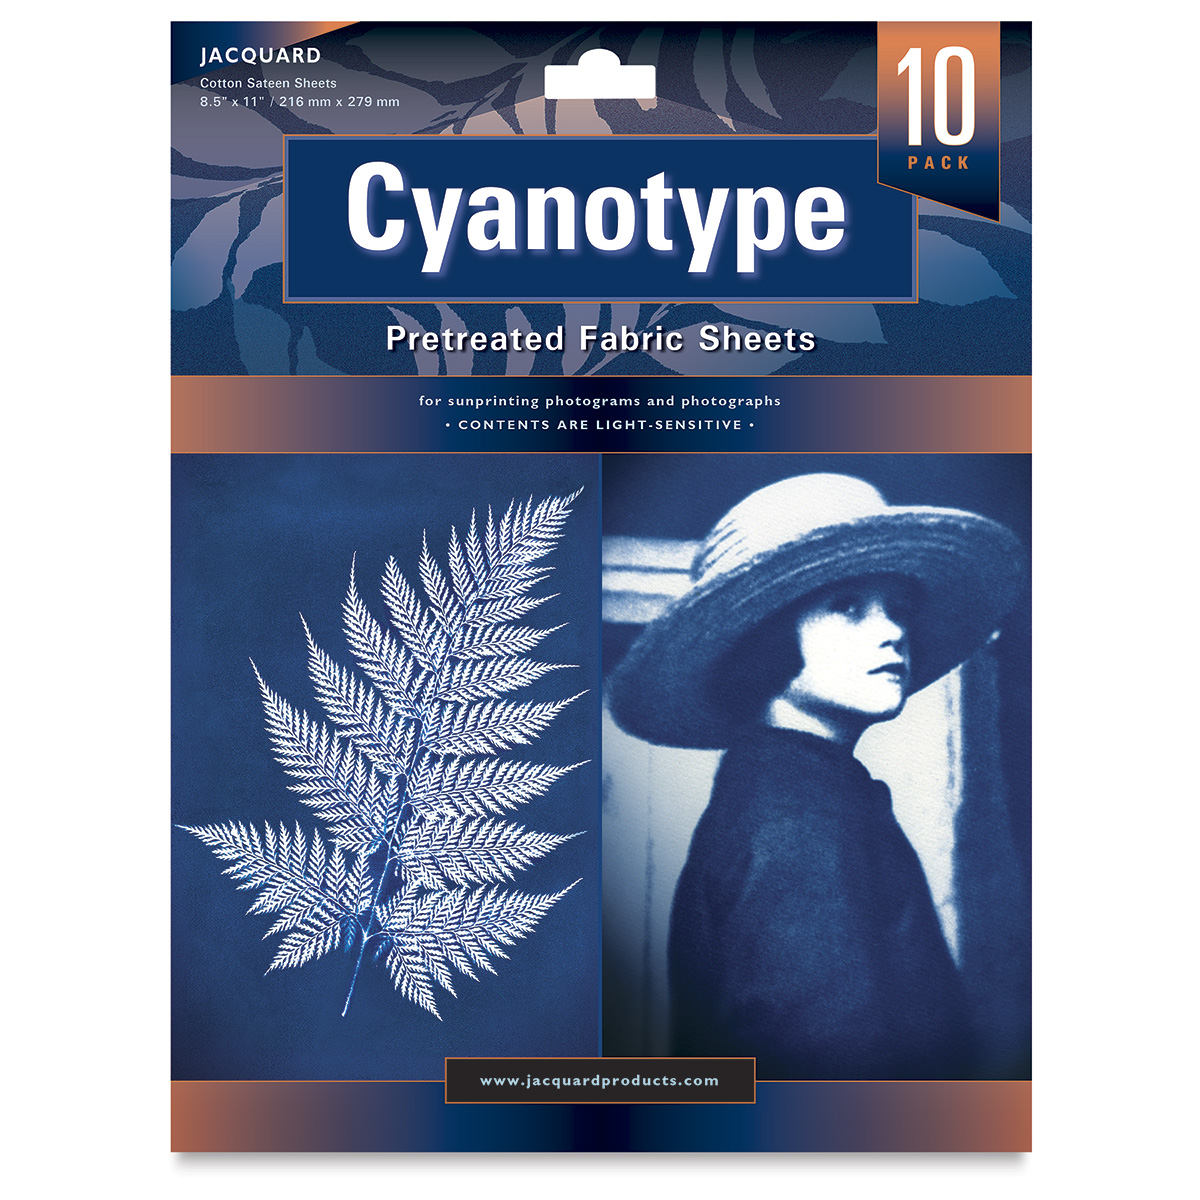 Fotospeed Cyanotype Kit Bundle Liquid, 308510